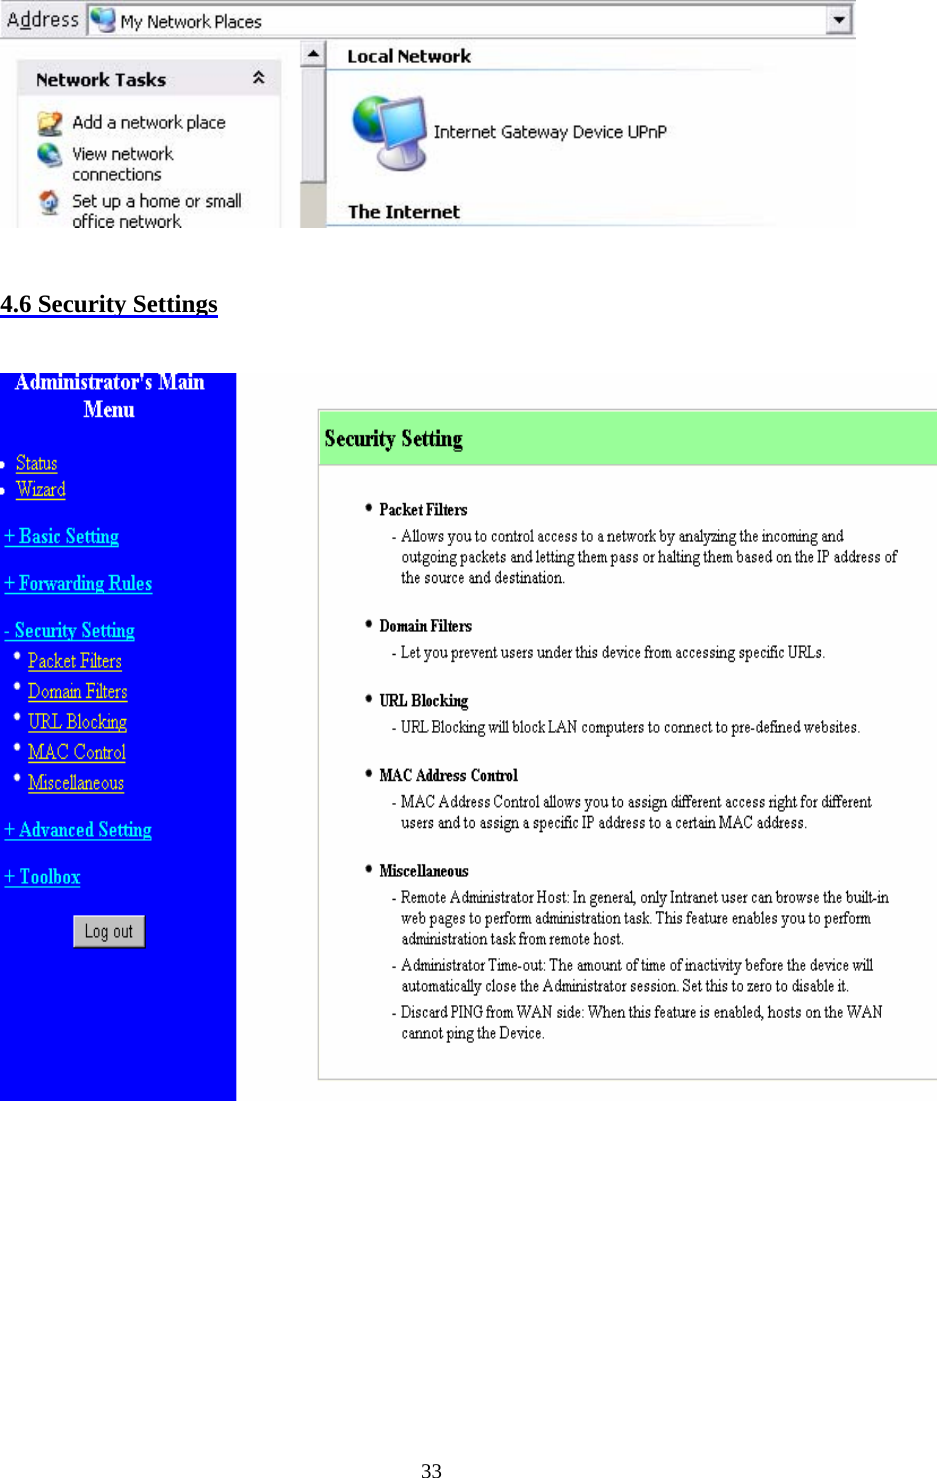   4.6 Security Settings      33